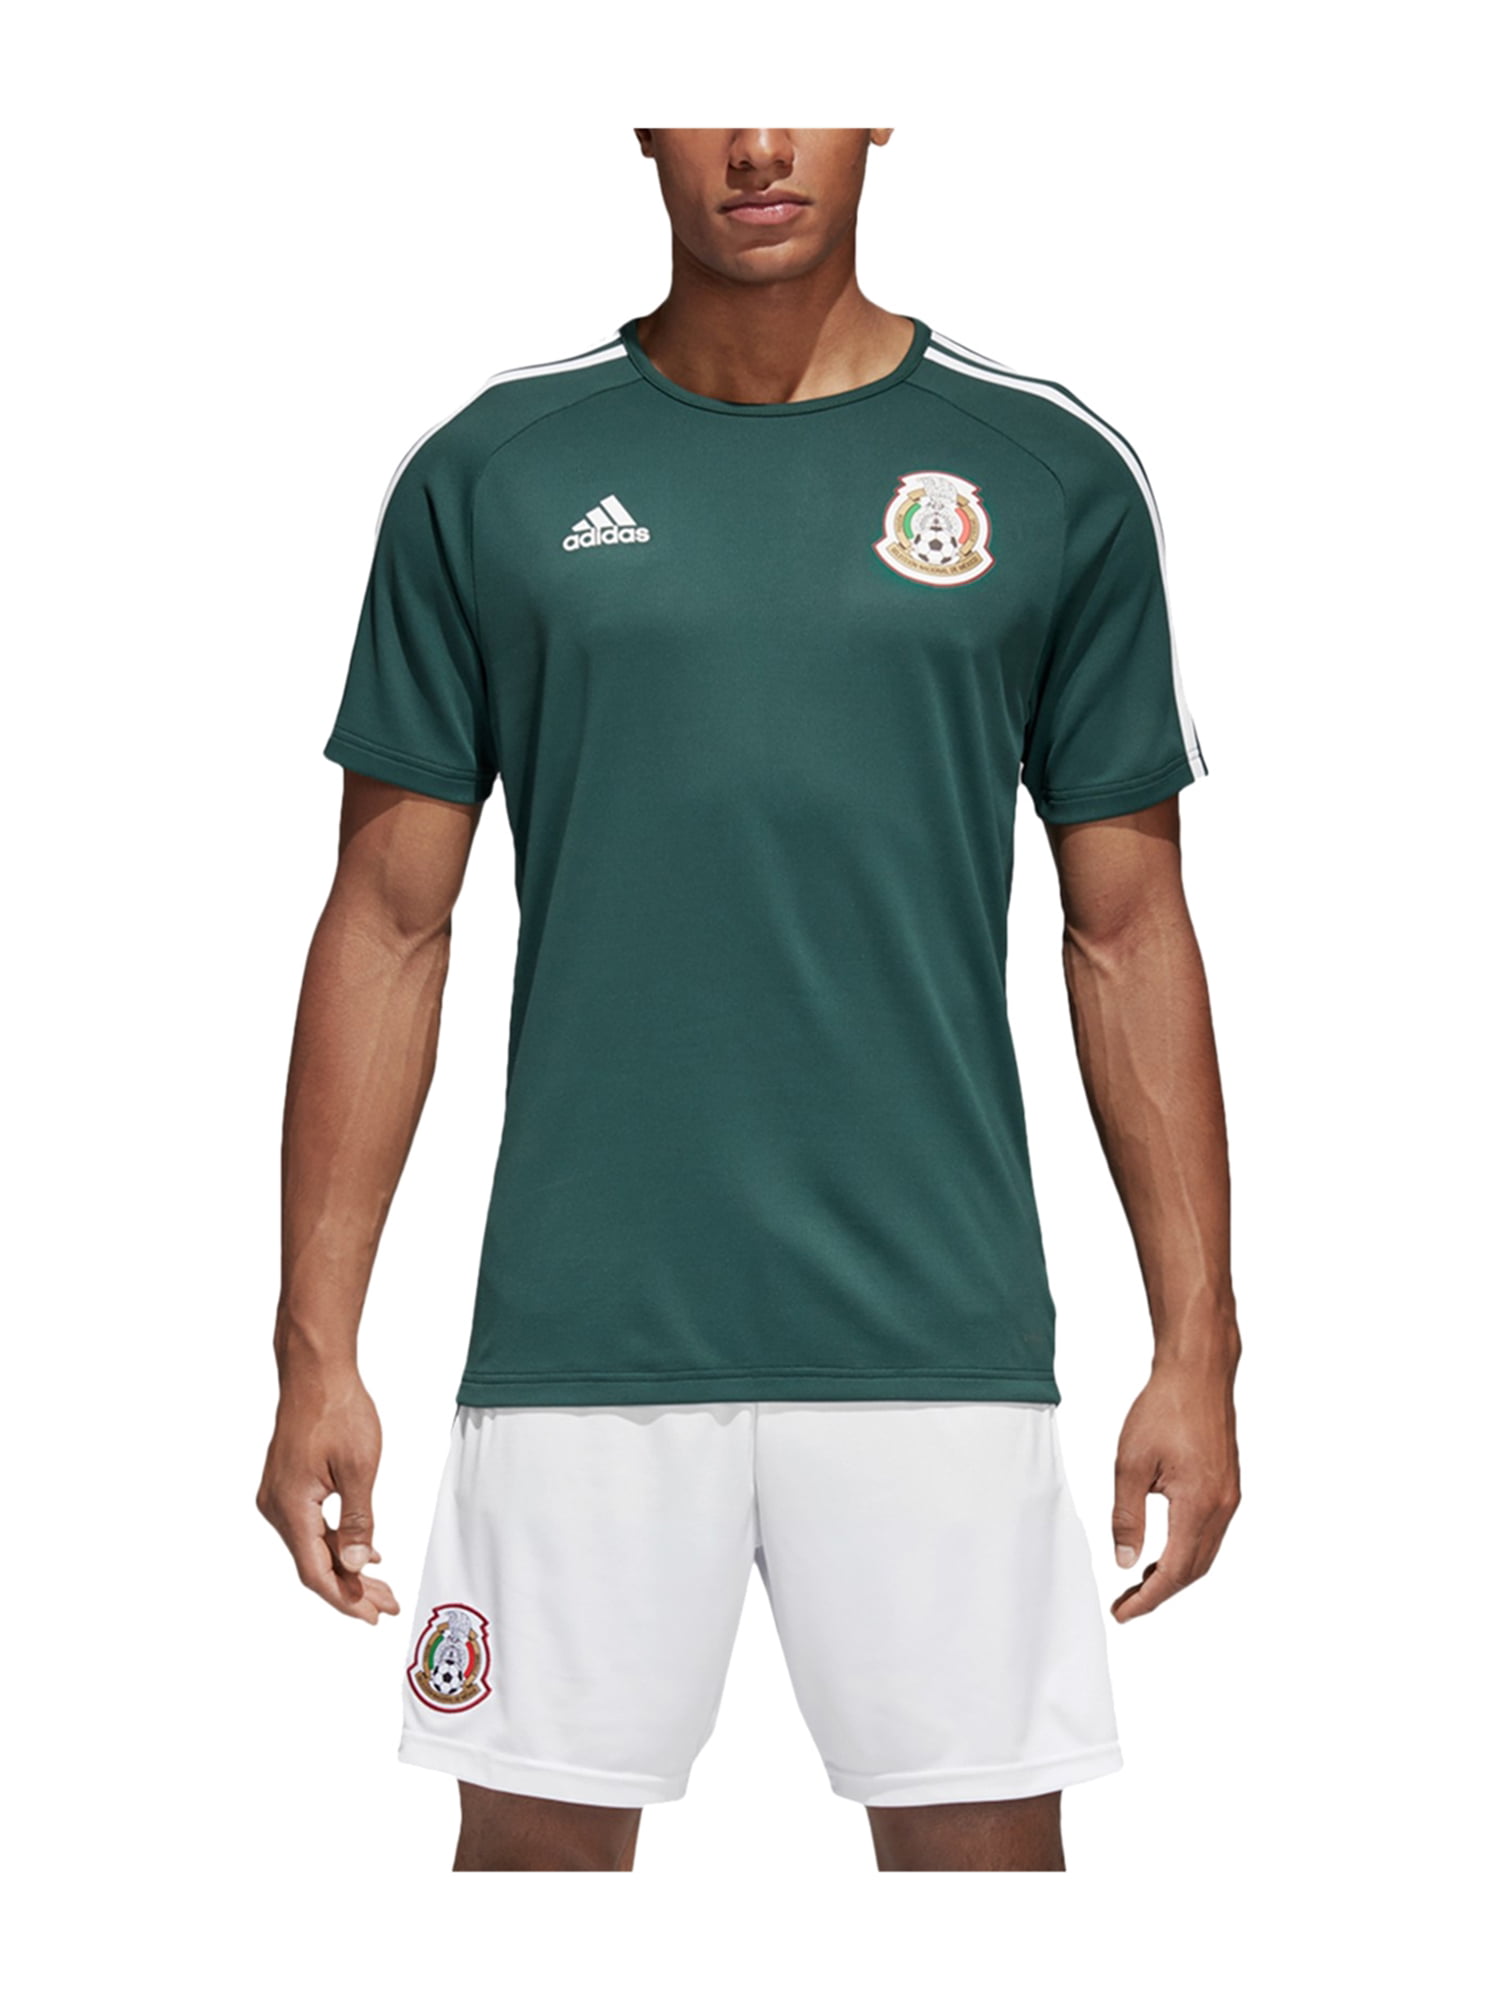 men's mexico soccer jersey